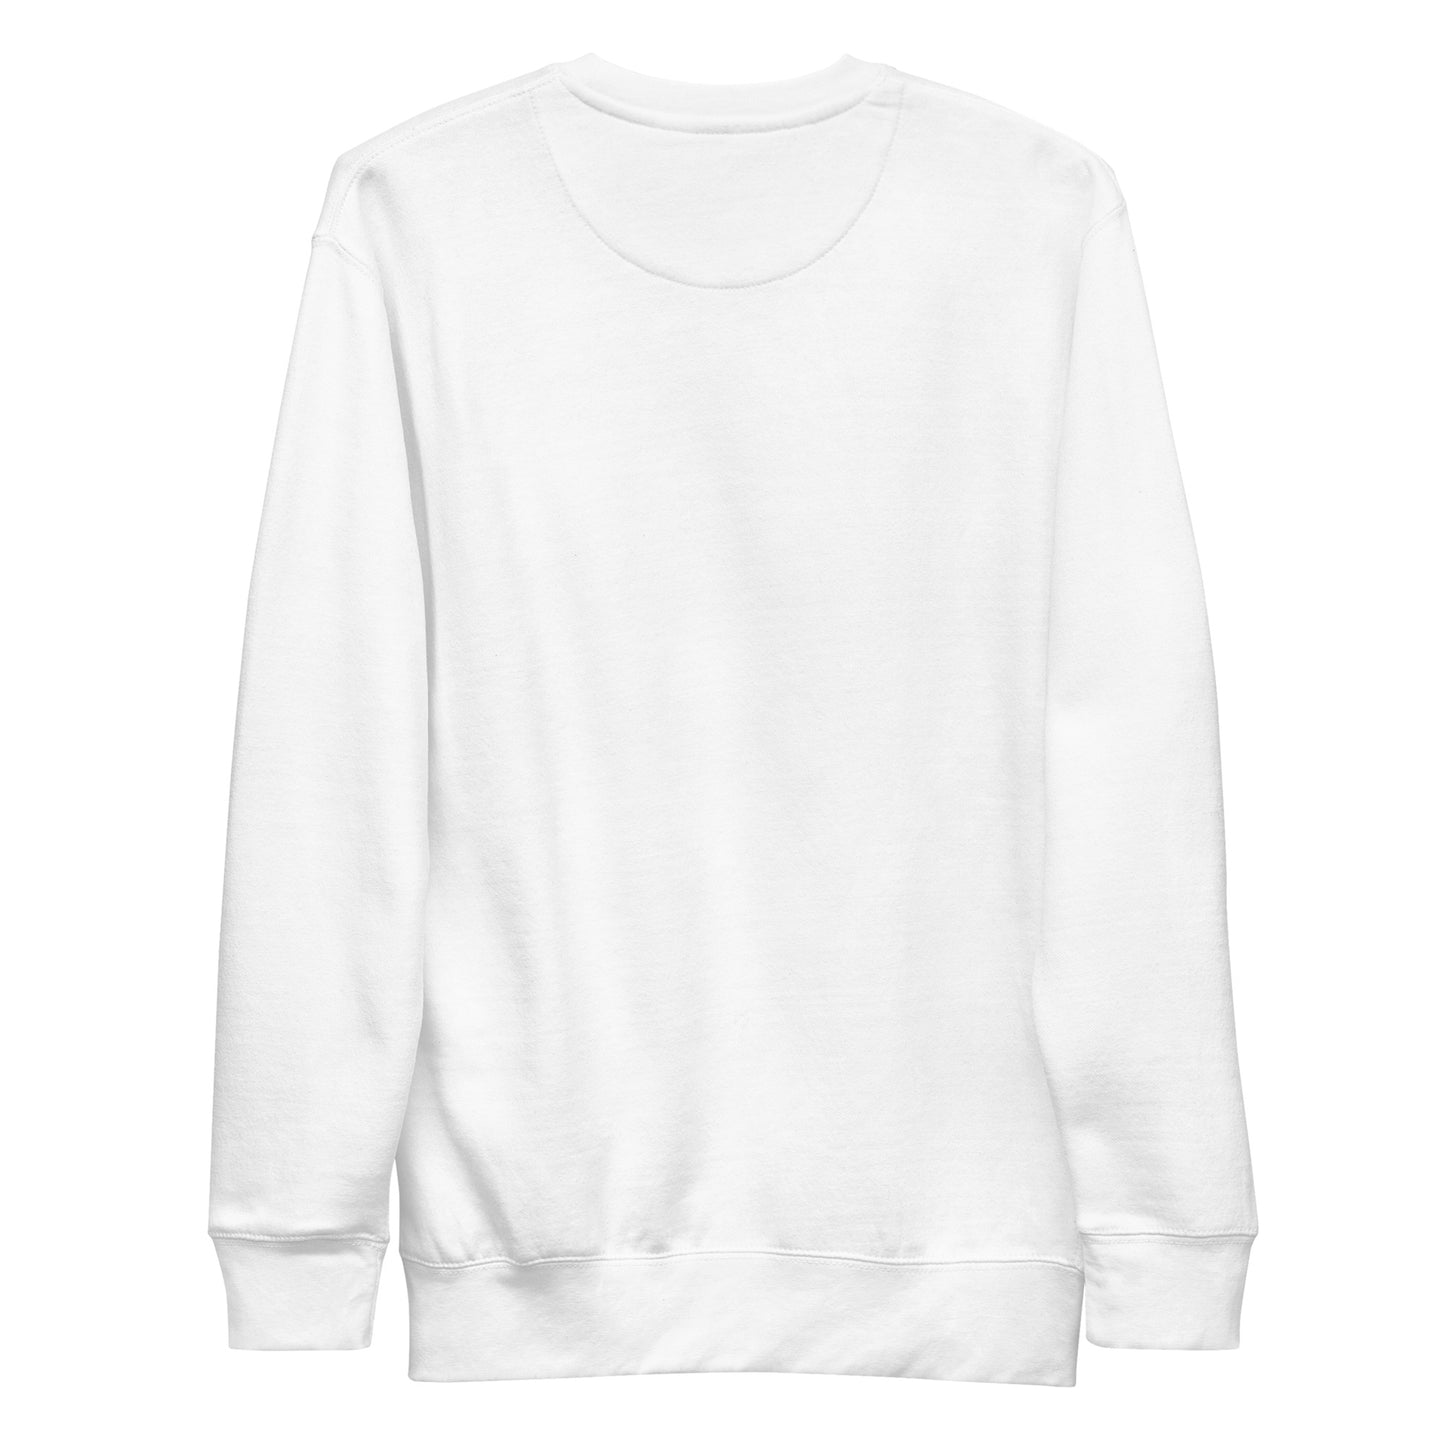 White Women's Premium Cotton Sweatshirt by Women's Premium Cotton Sweatshirt sold by Jain Yoga